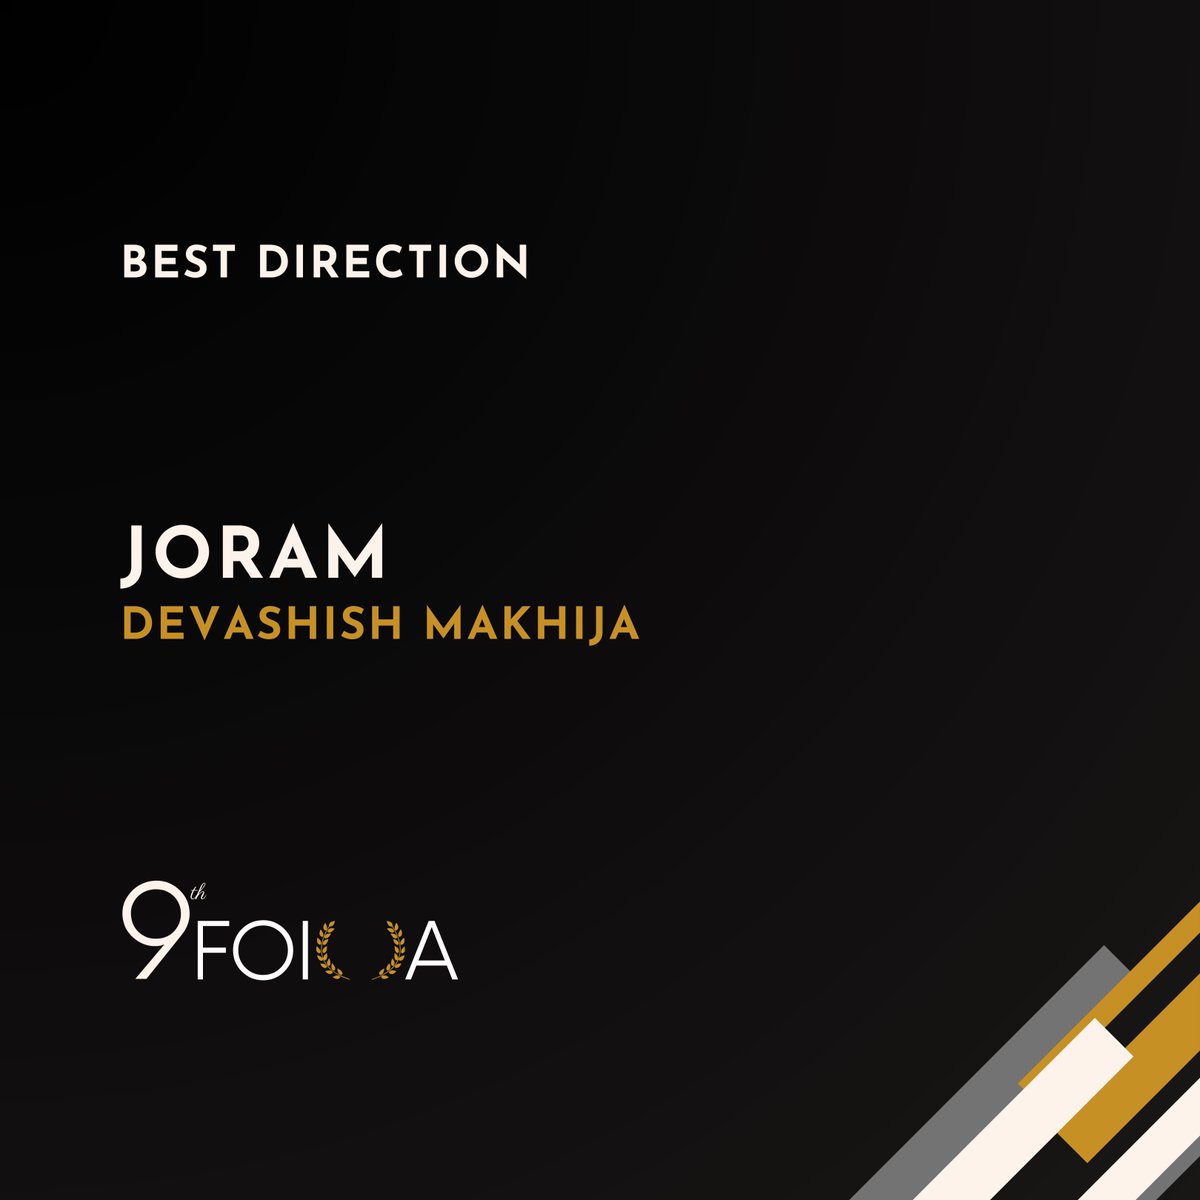 #9thFOIOA Best Direction Joram - Devashish Makhija @nakdindianfakir